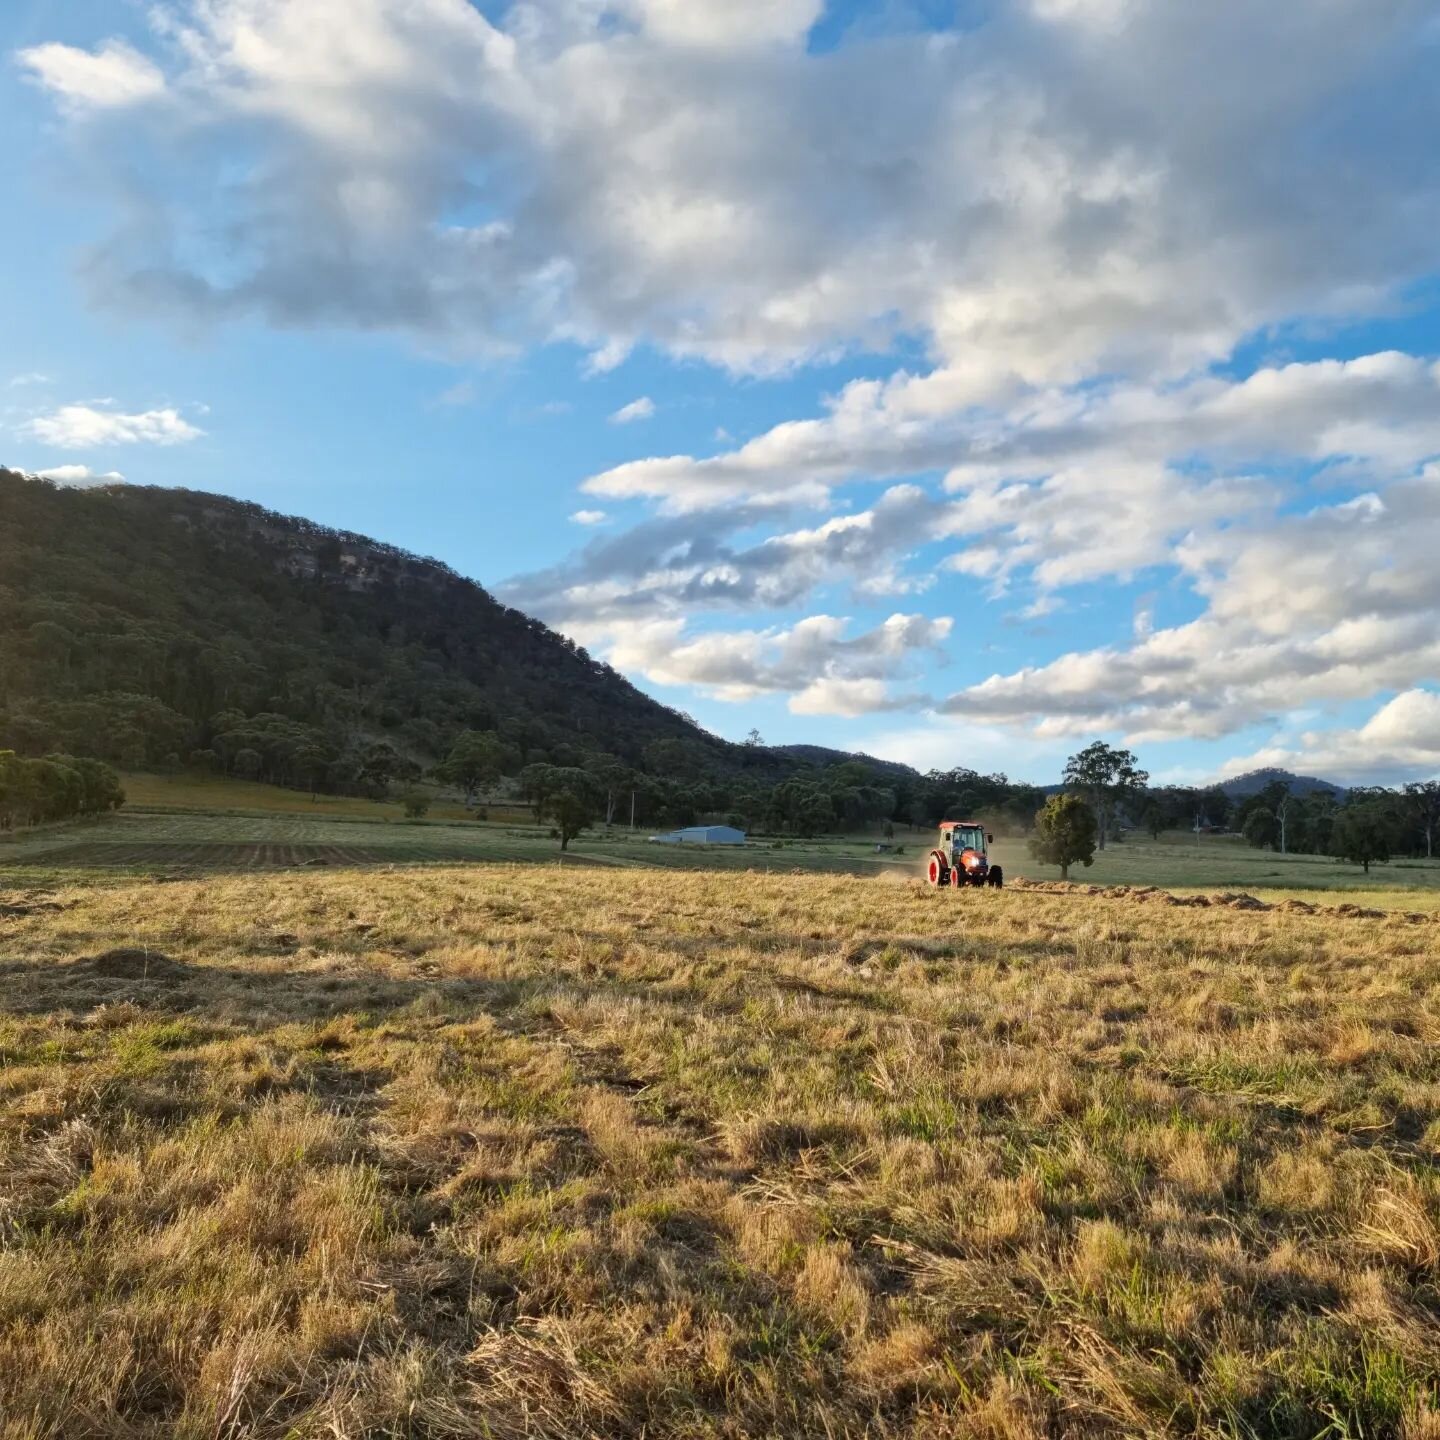 Making hay while the sun shine! 

#nsw #ruralnsw #farming #farmlife